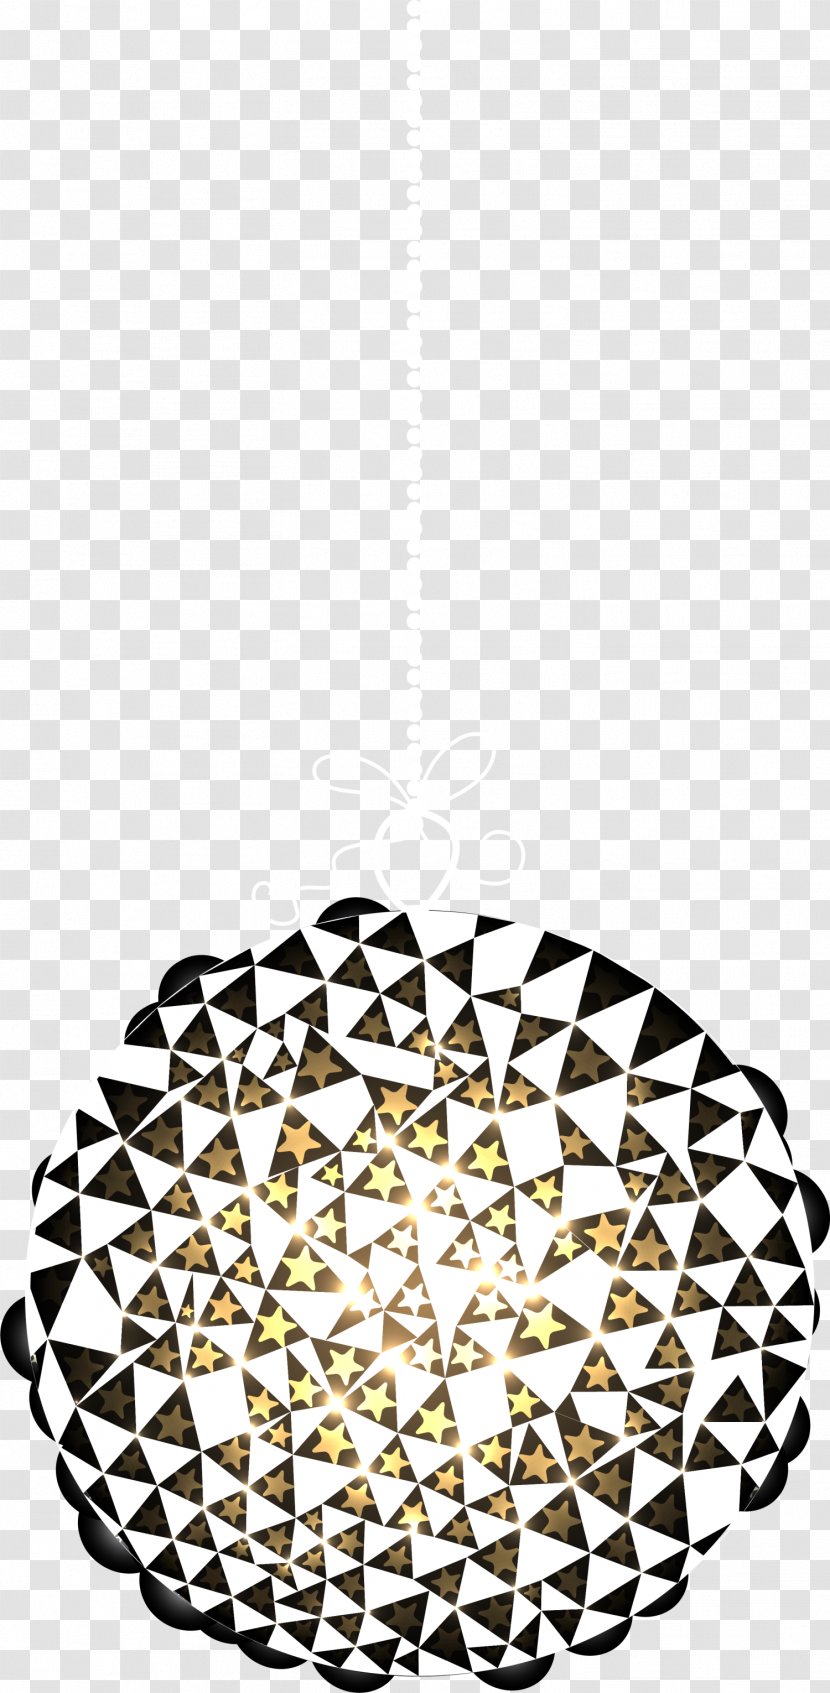 Ornament Pattern - Star - The Golden Ornaments Transparent PNG